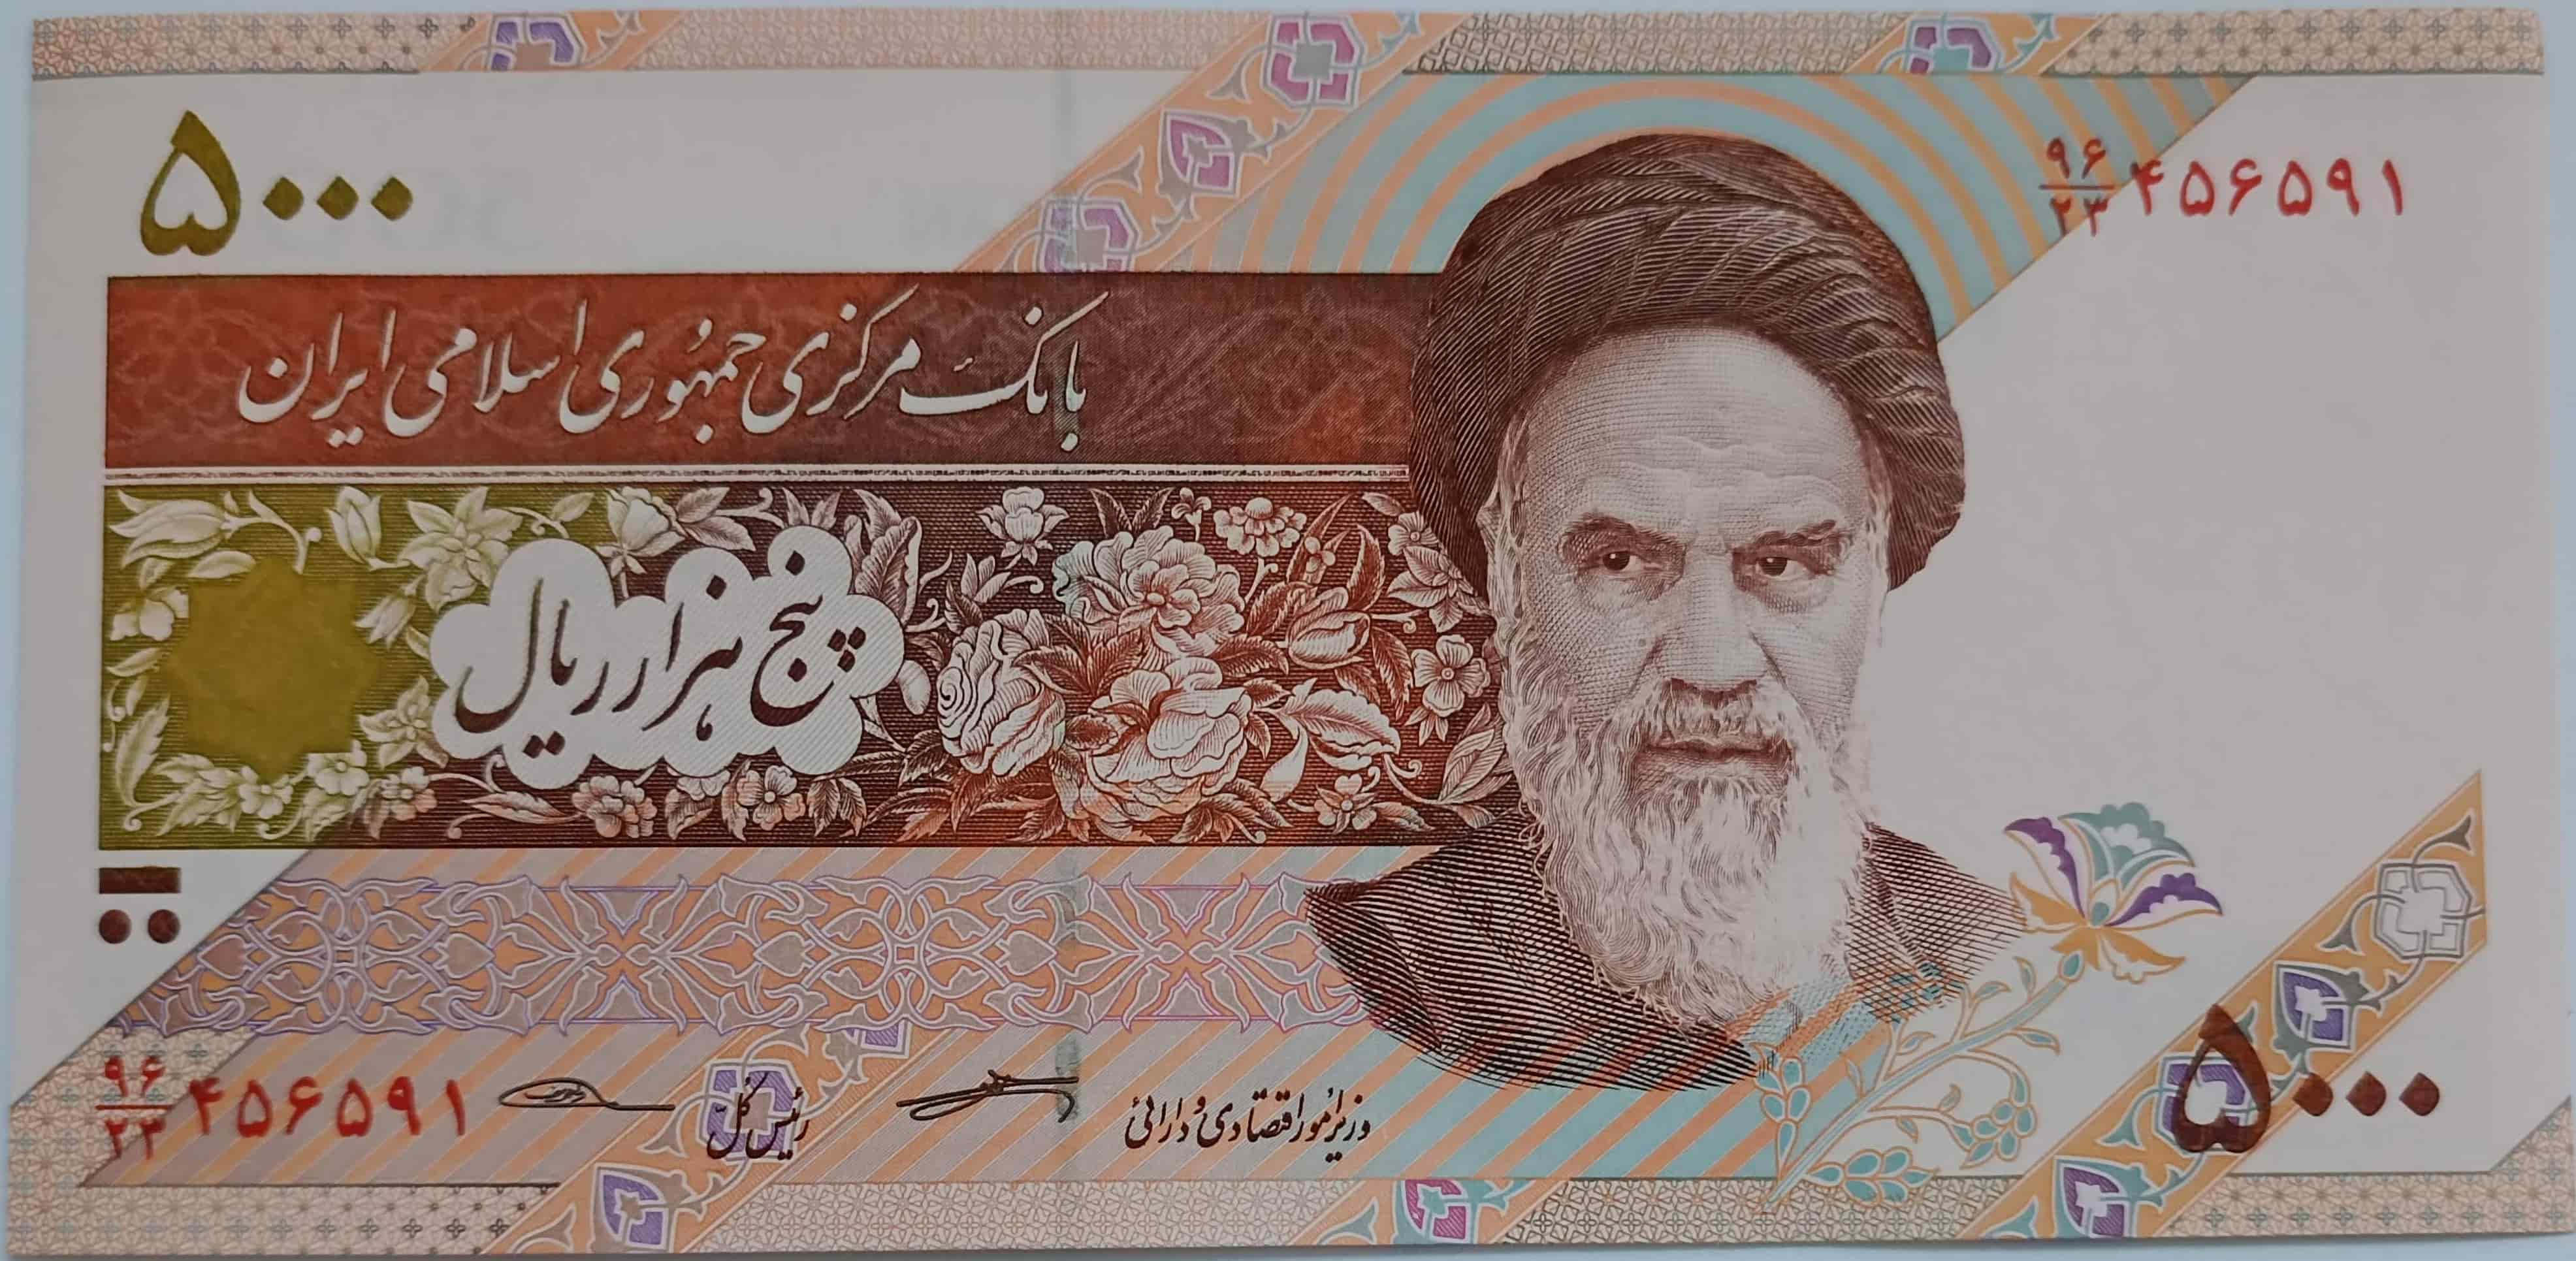 5000 Rials 2013  Irán